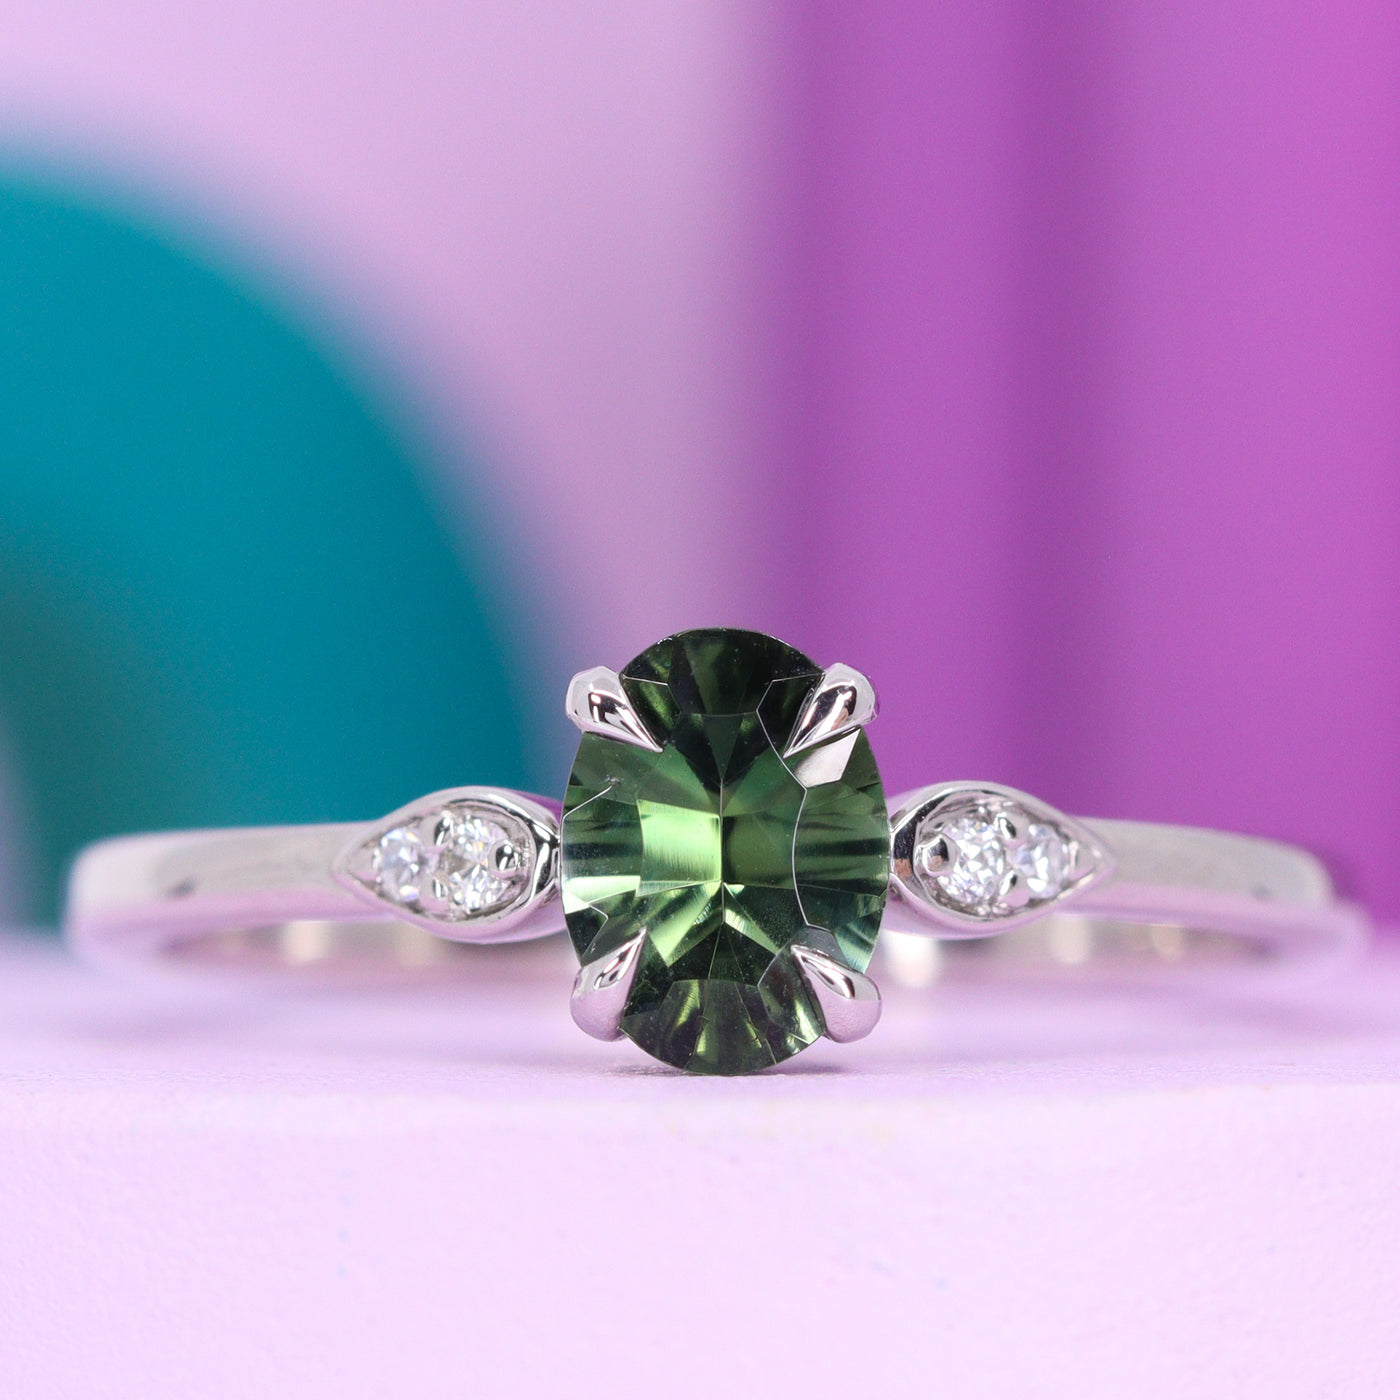 Rosa - Optix Oval Cut Green Tourmaline Engagement Ring with Bezel Detail - Custom Made-to-Order Design